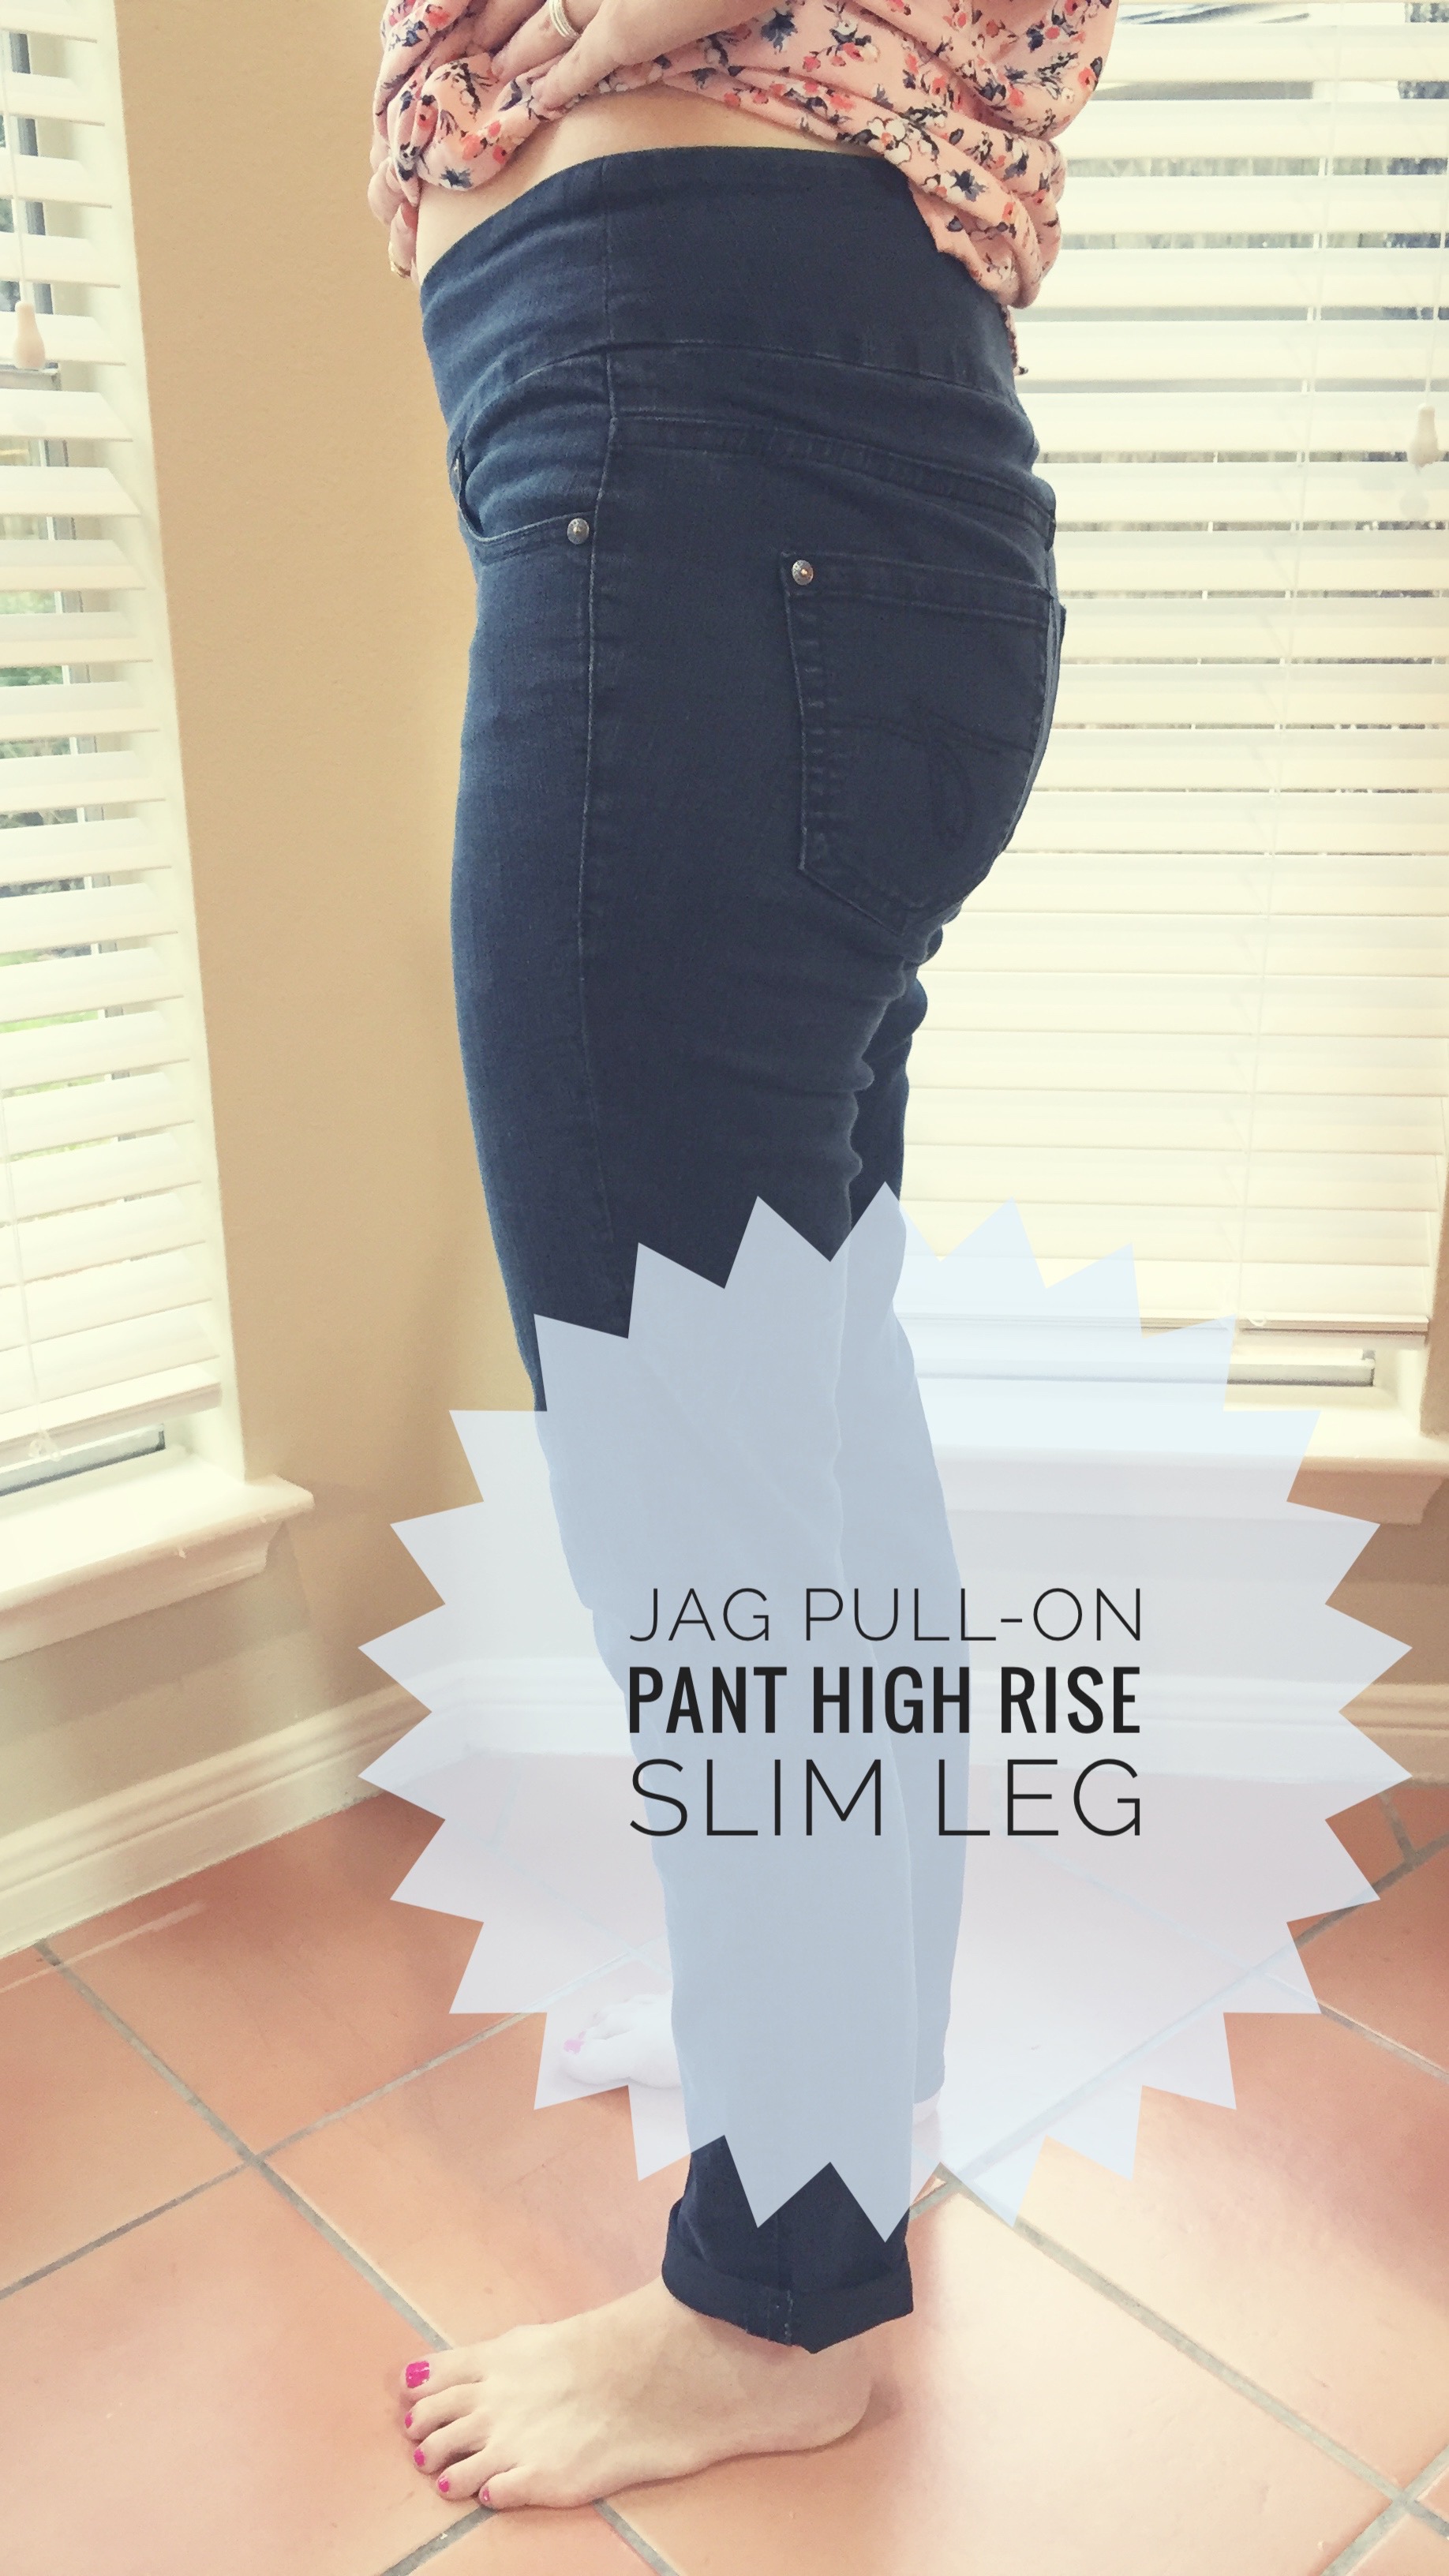 Maternity Jeans Test, Lisa Rutledge Midwife - 2.jpg